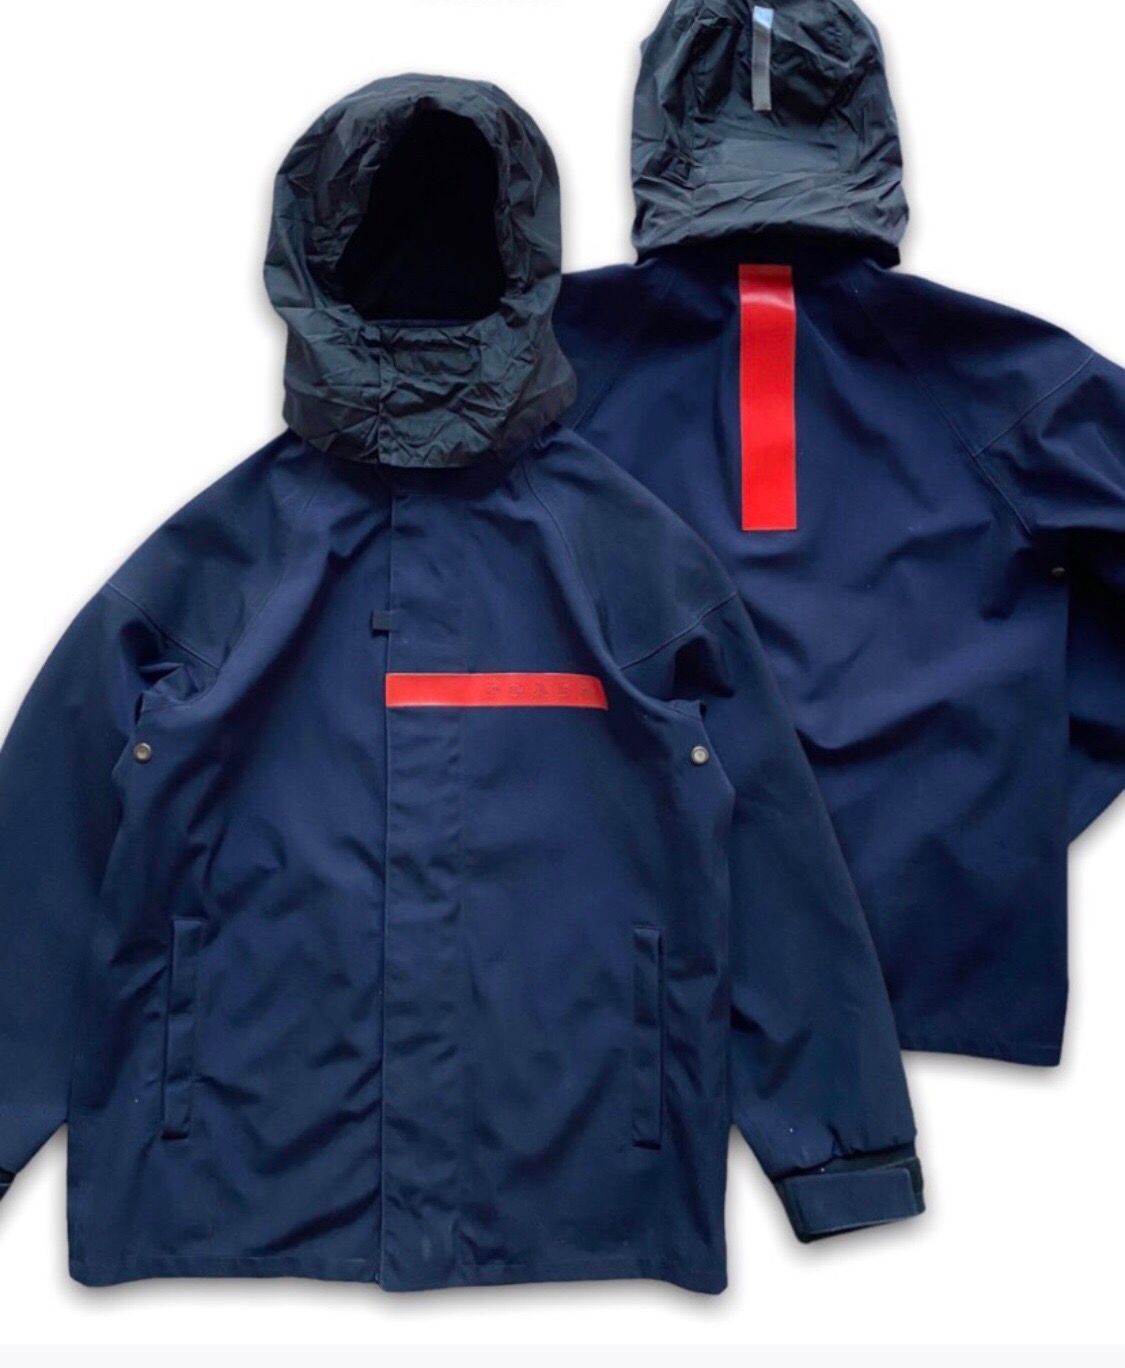 Prada S/S 2000 Iconic Prada Sport Gore-Tex Shell jacket | Grailed